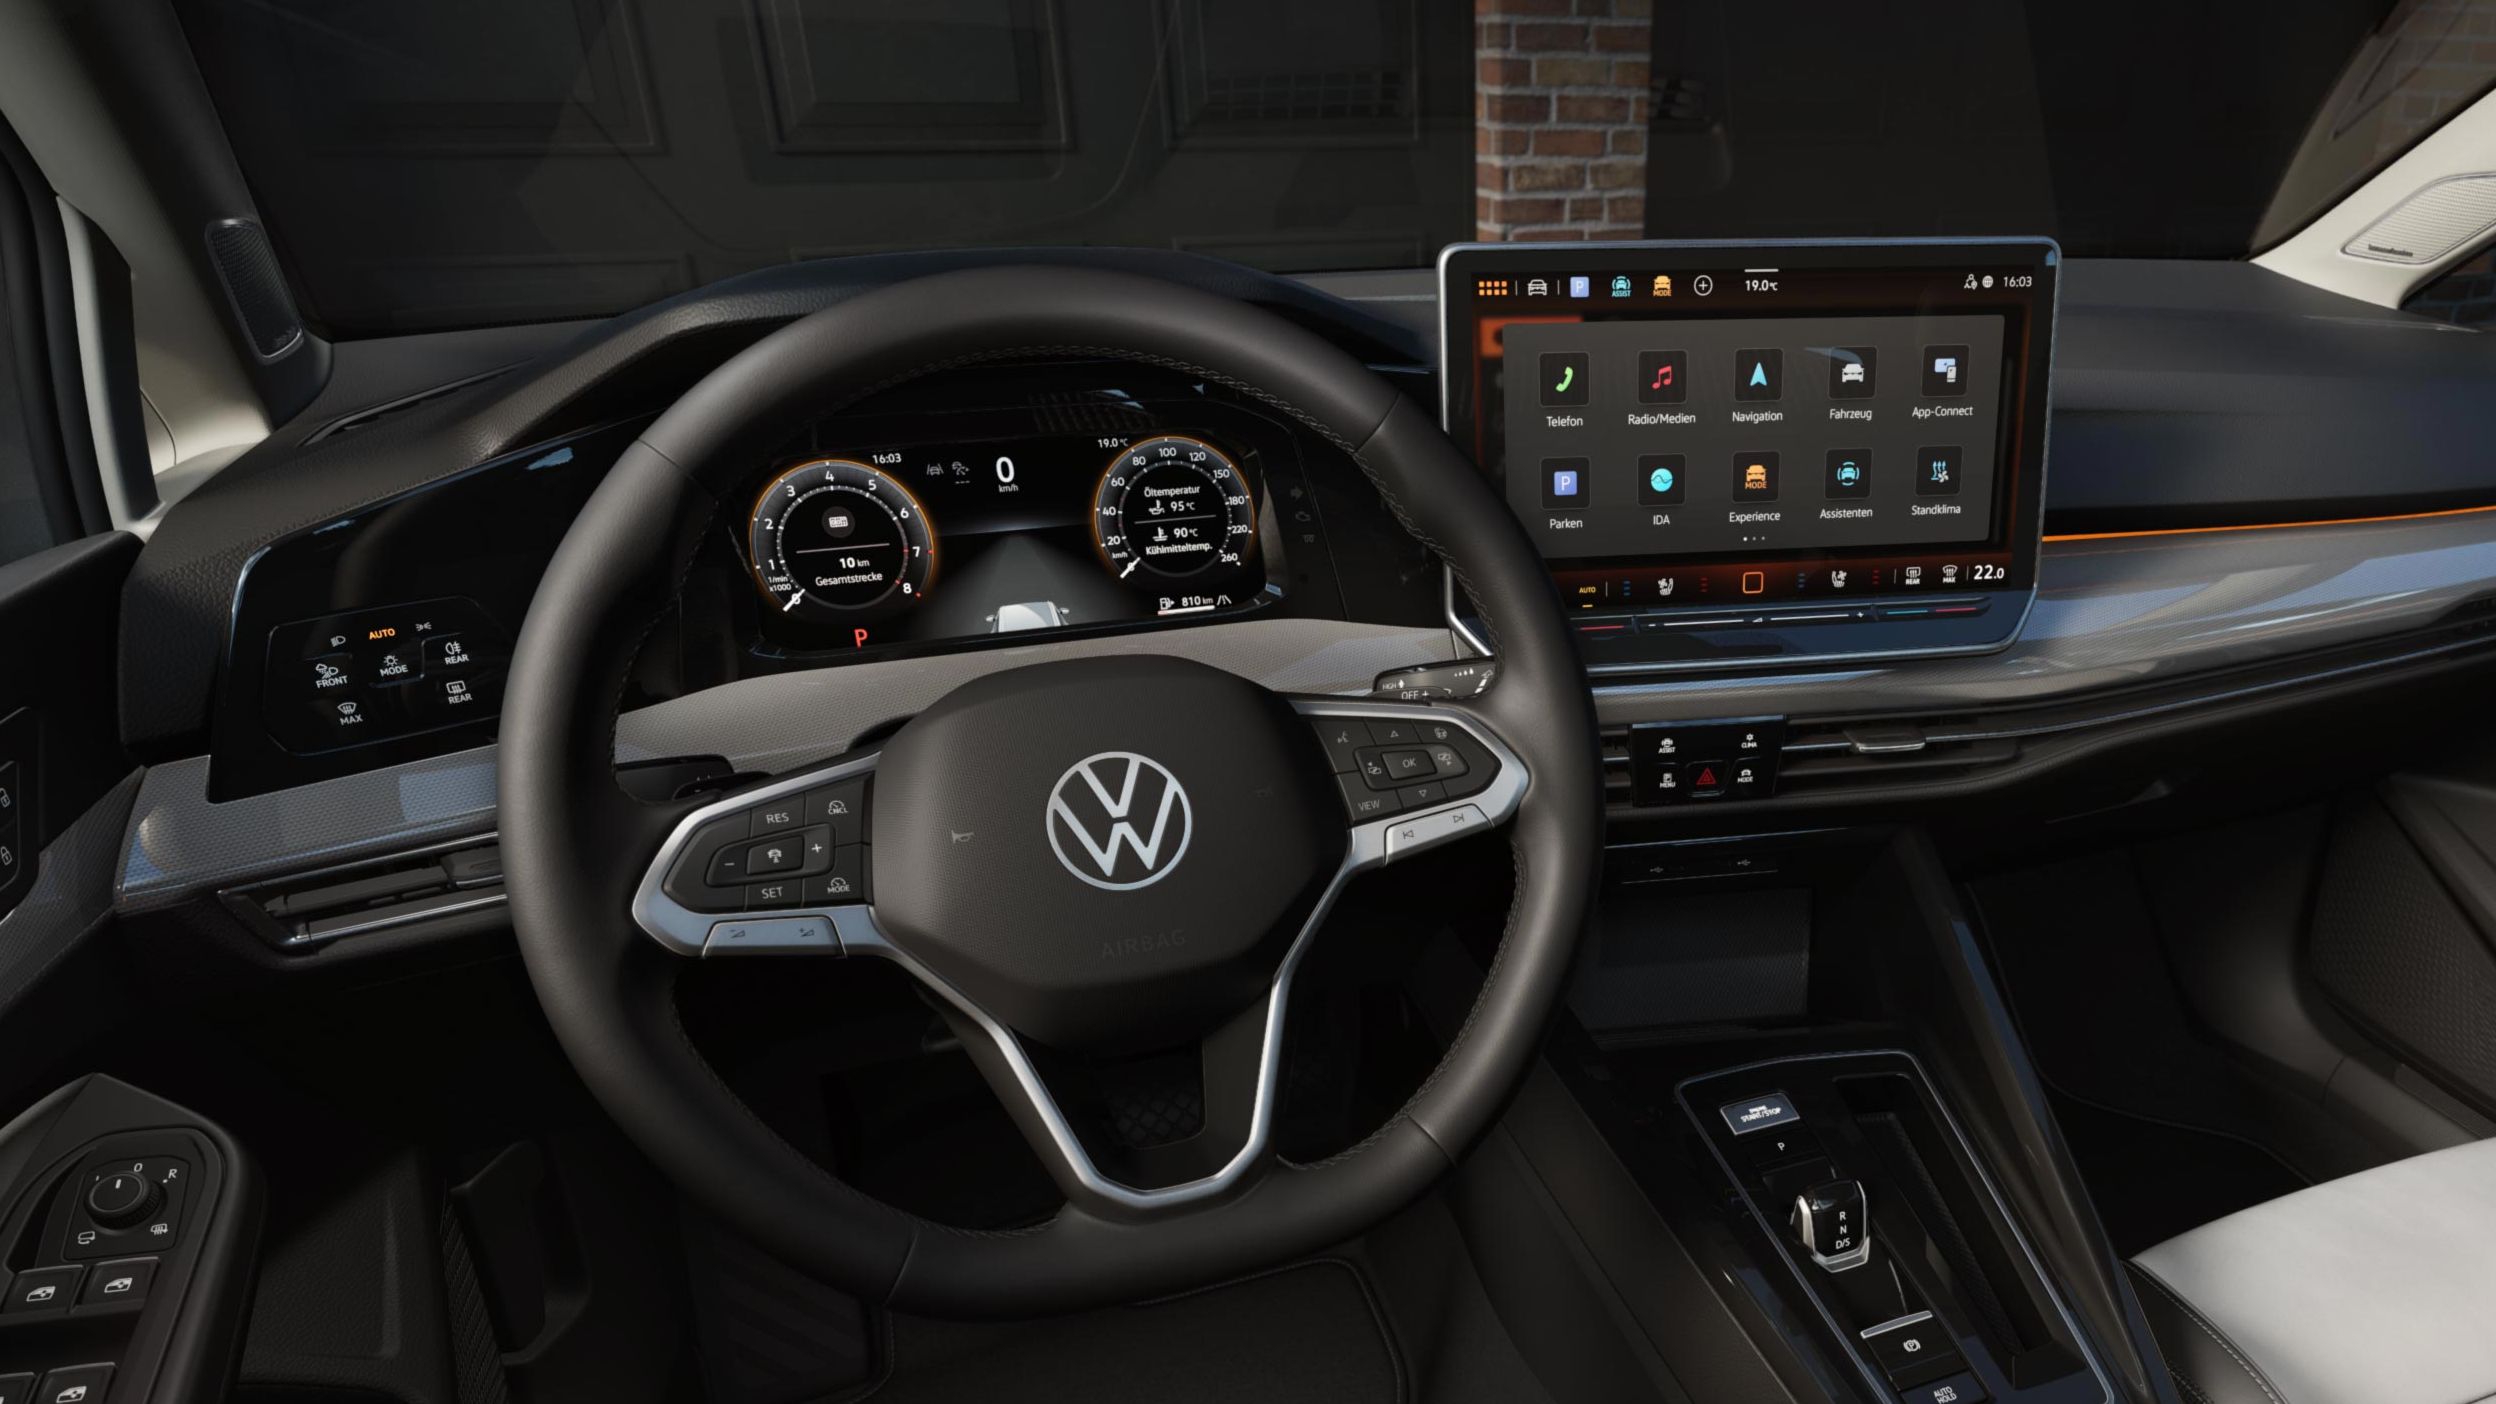 Lenkrad, Digital Cockpit, Sitze und Infotainment des VW Golf Variant